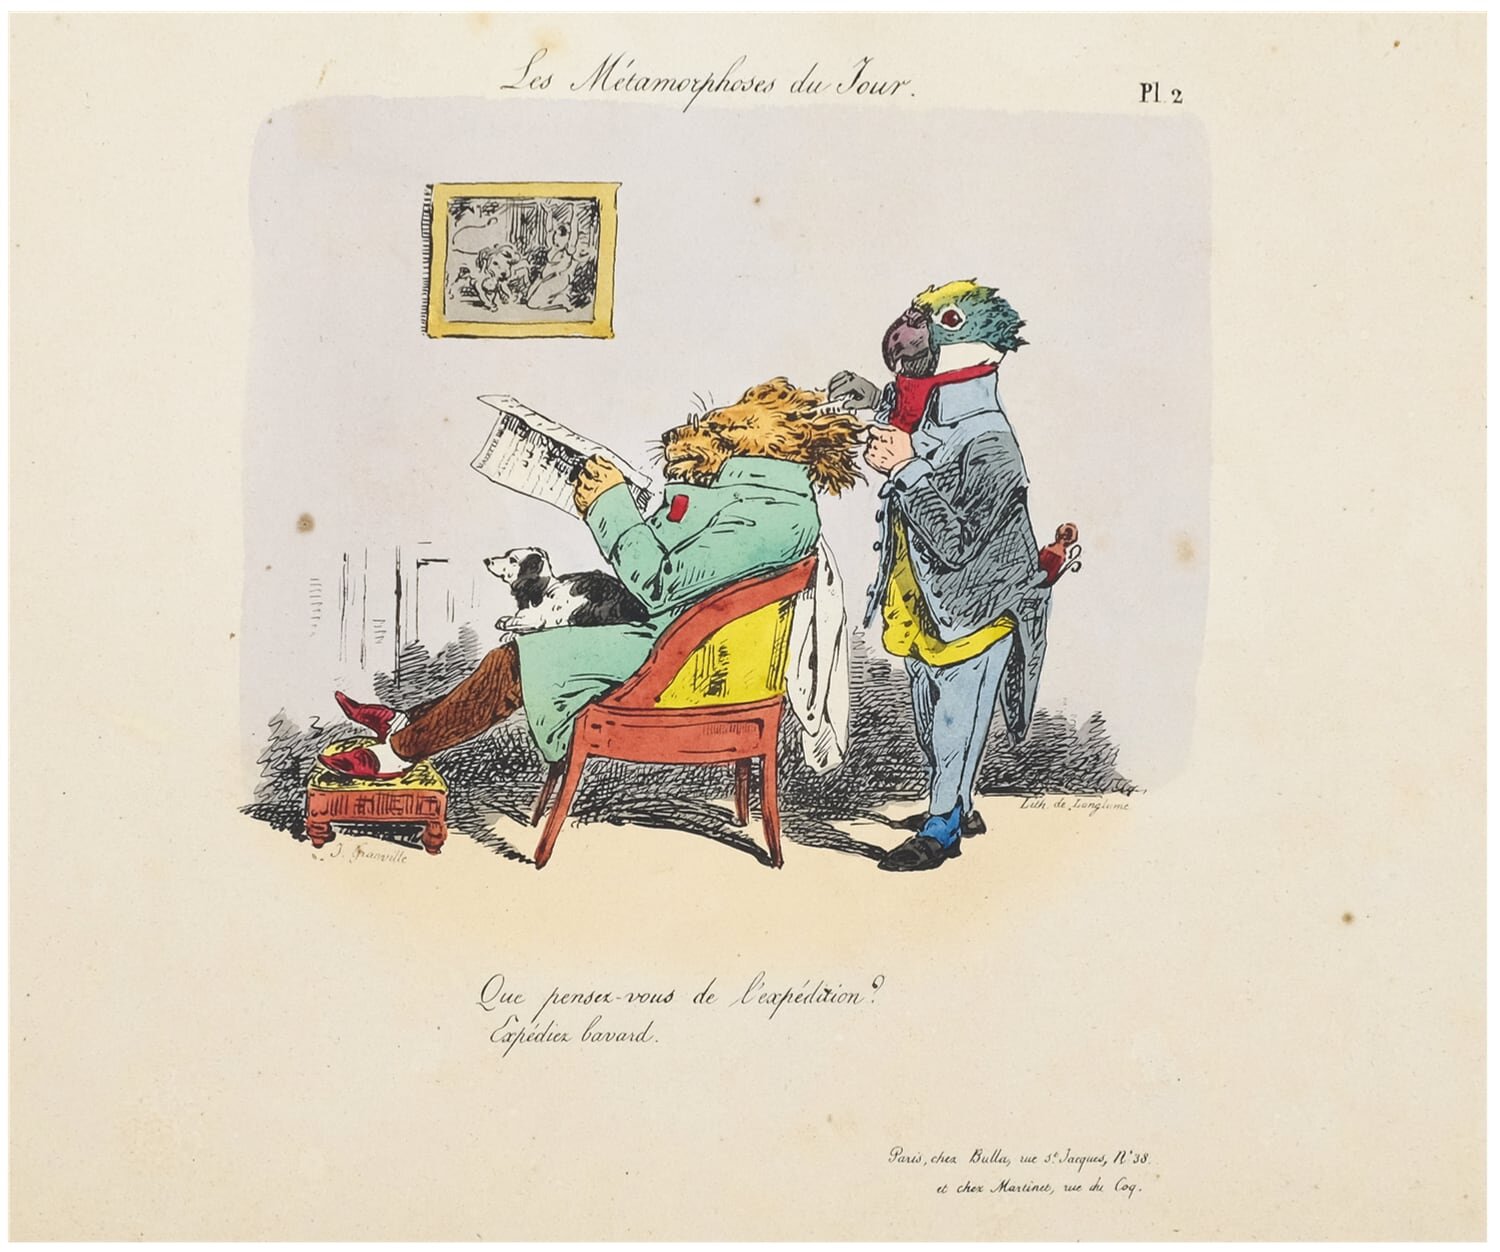  An uncut, hand-coloured copy of  Les Métamorphoses du jour  in a contemporary binding by Thouvenin [no. 279] 